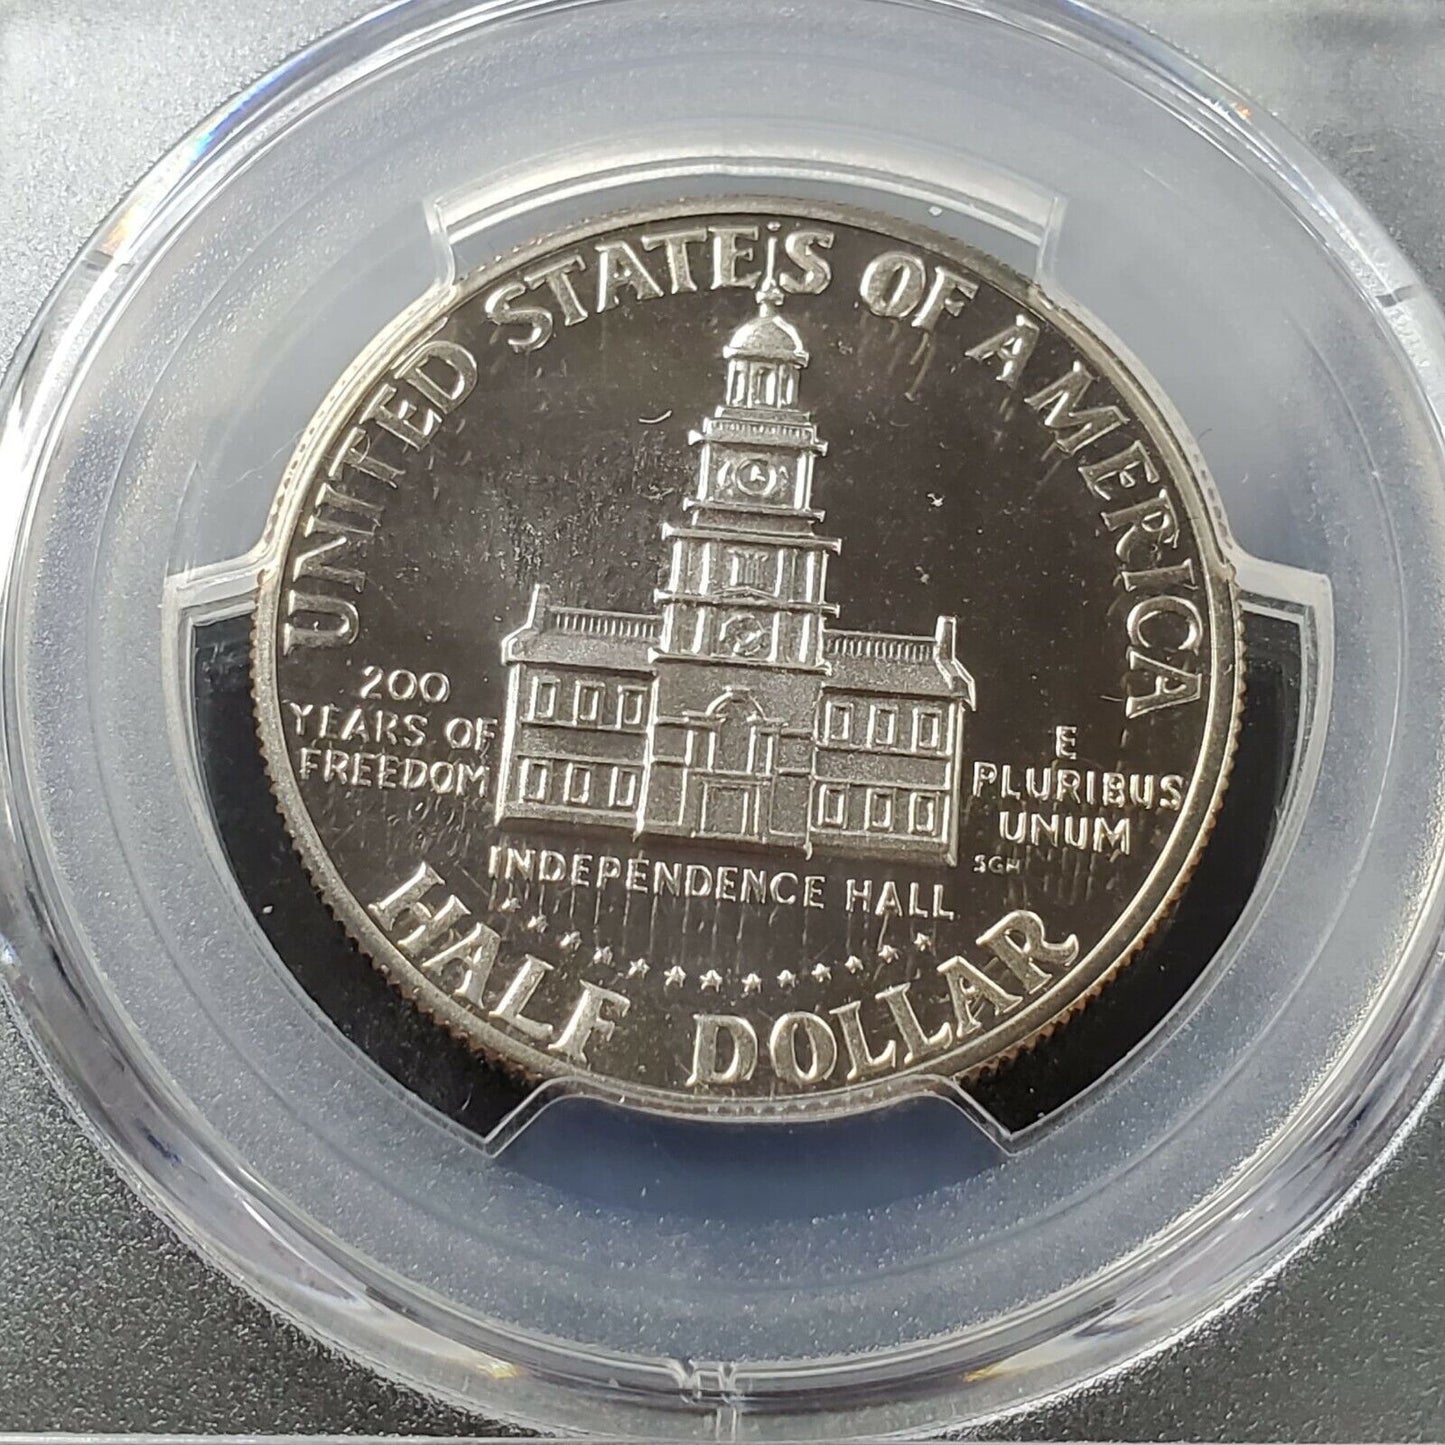 1976 S CLAD Kennedy Proof Eagle Half Dollar Coin PCGS PR69 DCAM Gem